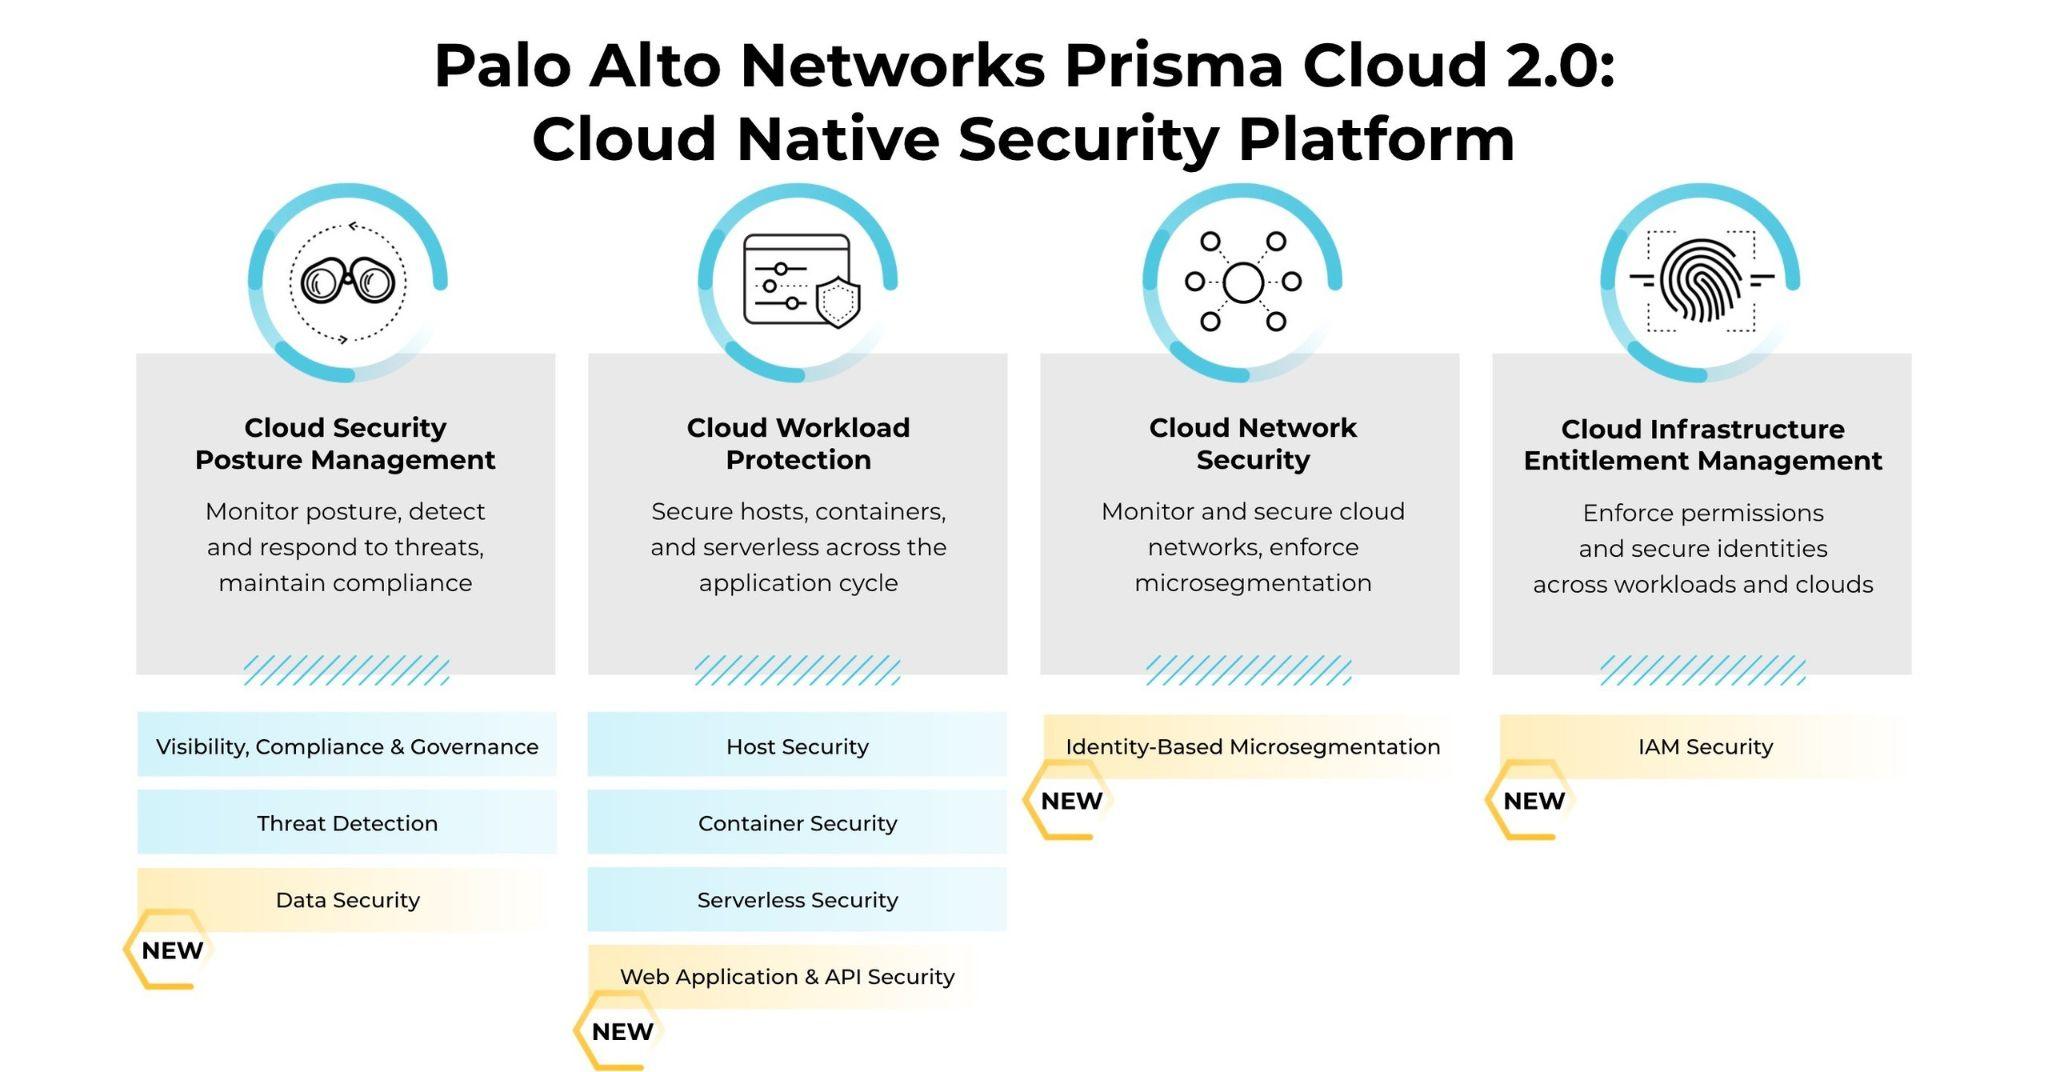 Prisma Cloud Native Security Platform 2.0